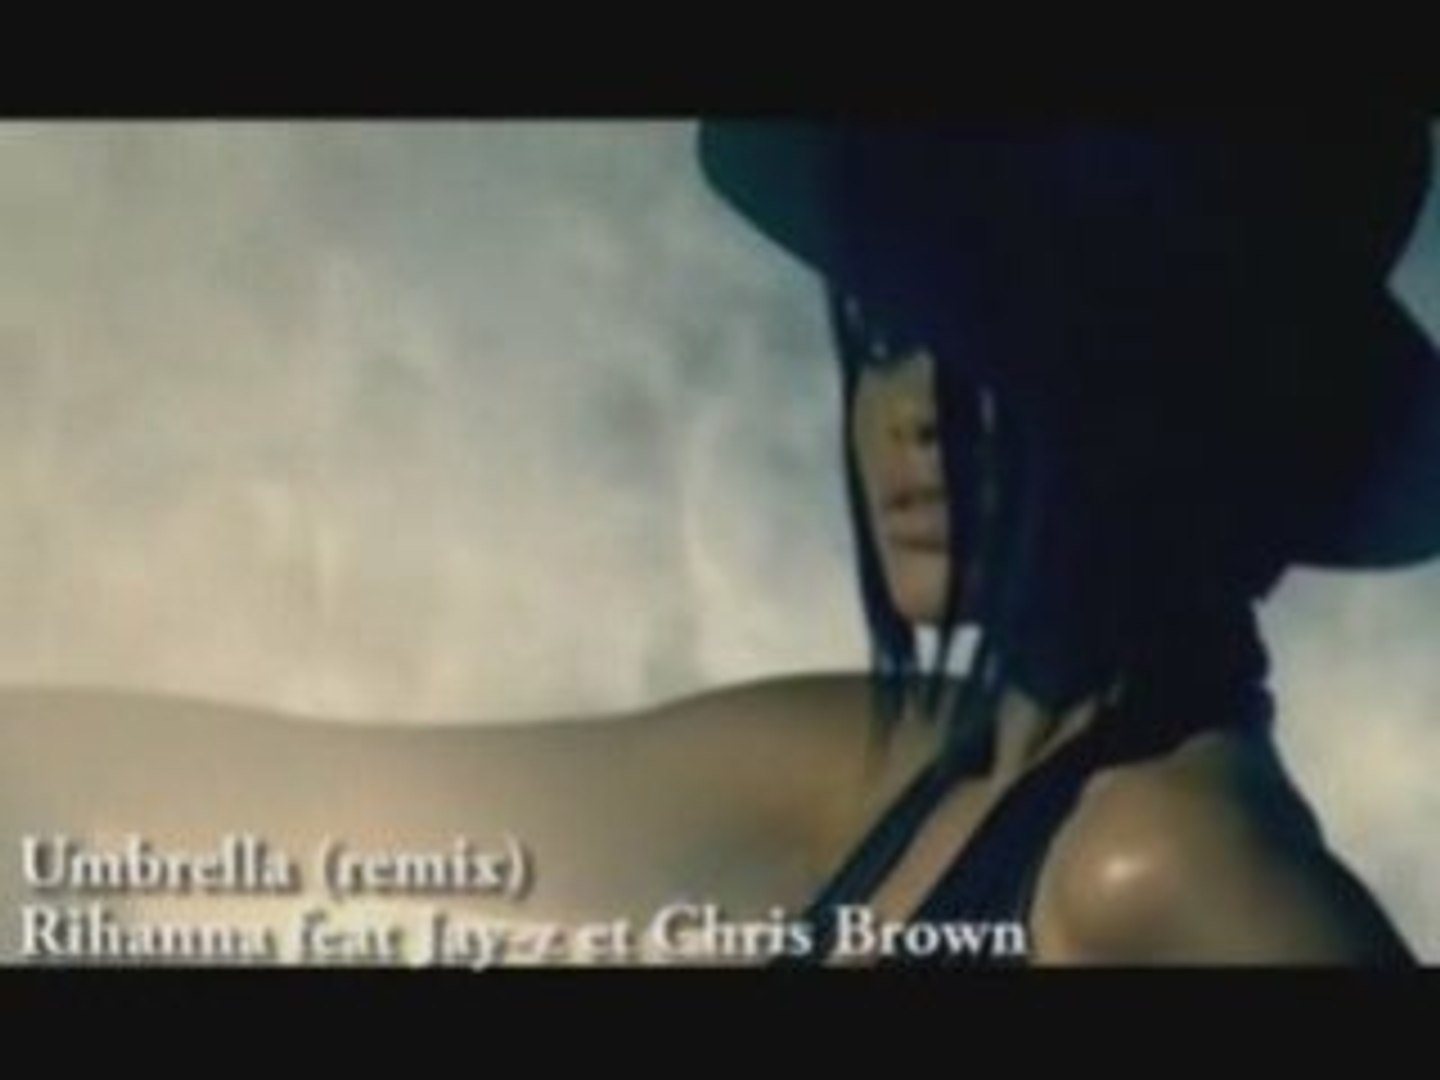 Umbrella (Remix) - RIhanna feat. Jay-z et Chris Brown - Vidéo Dailymotion